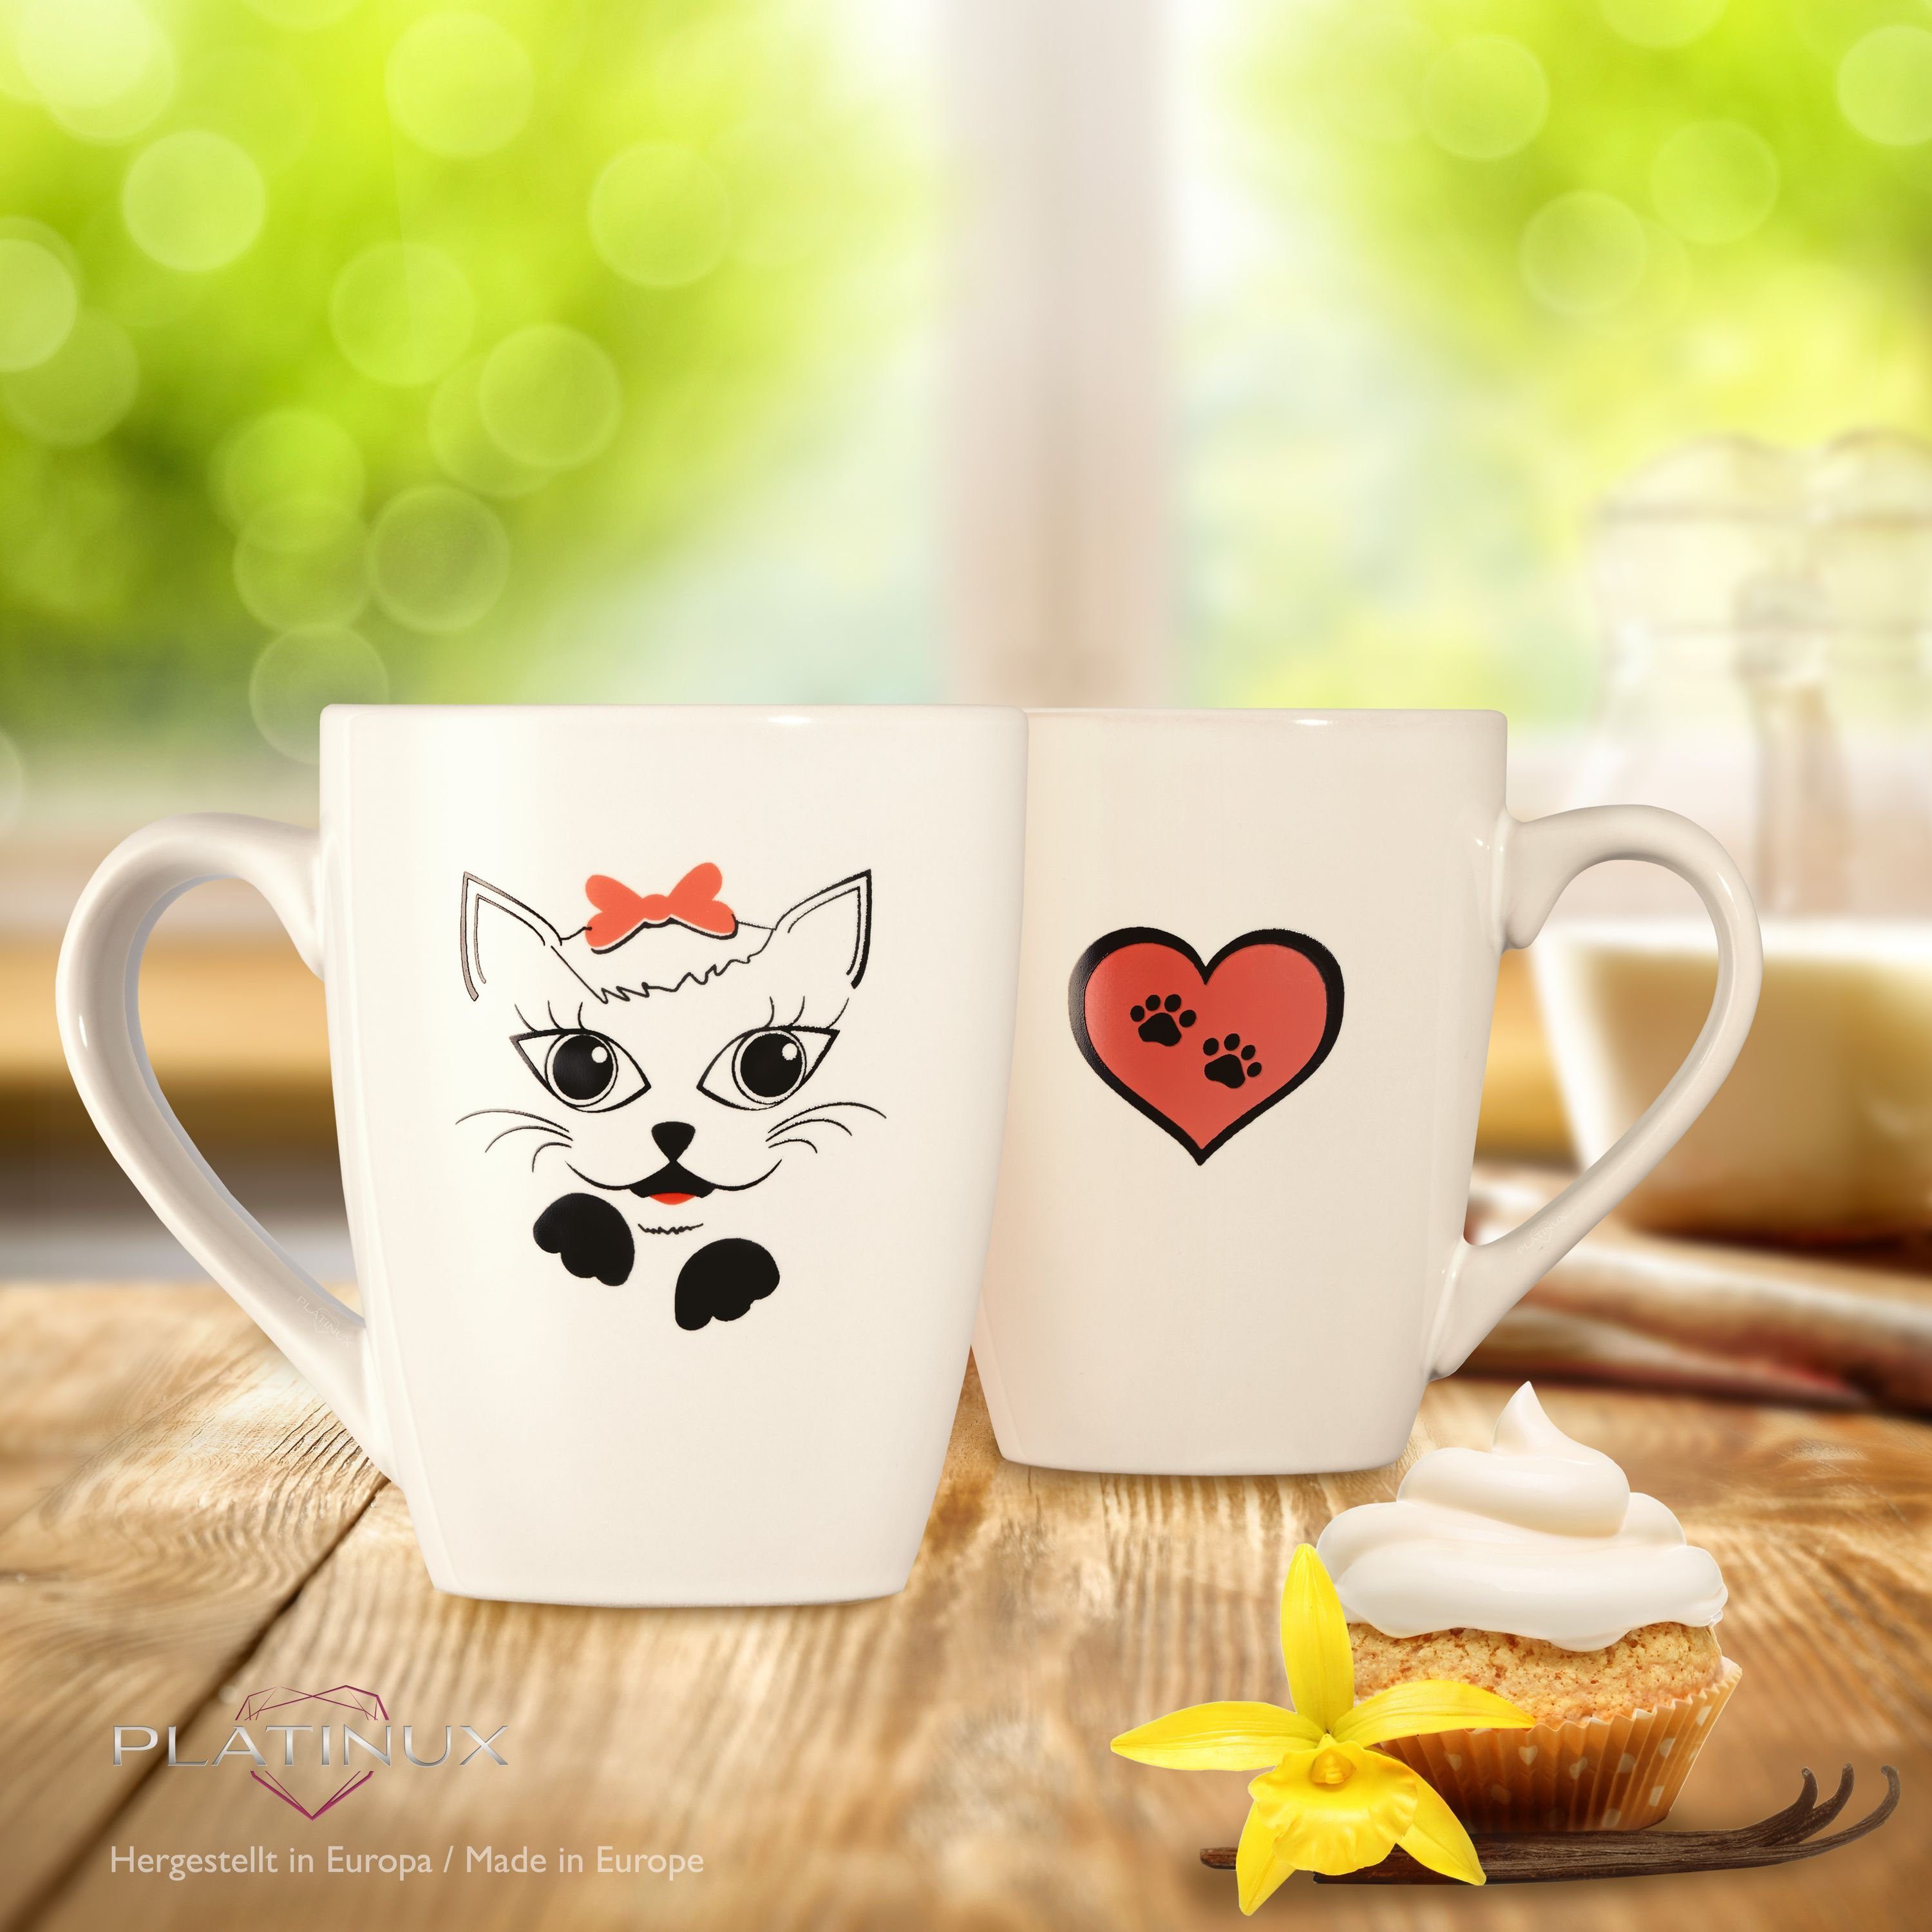 PLATINUX Tasse Katzen Kaffeetassen, Keramik, Teebecher Set 250ml Tasse Katzen-Motiven Kaffeebecher Teetasse mit